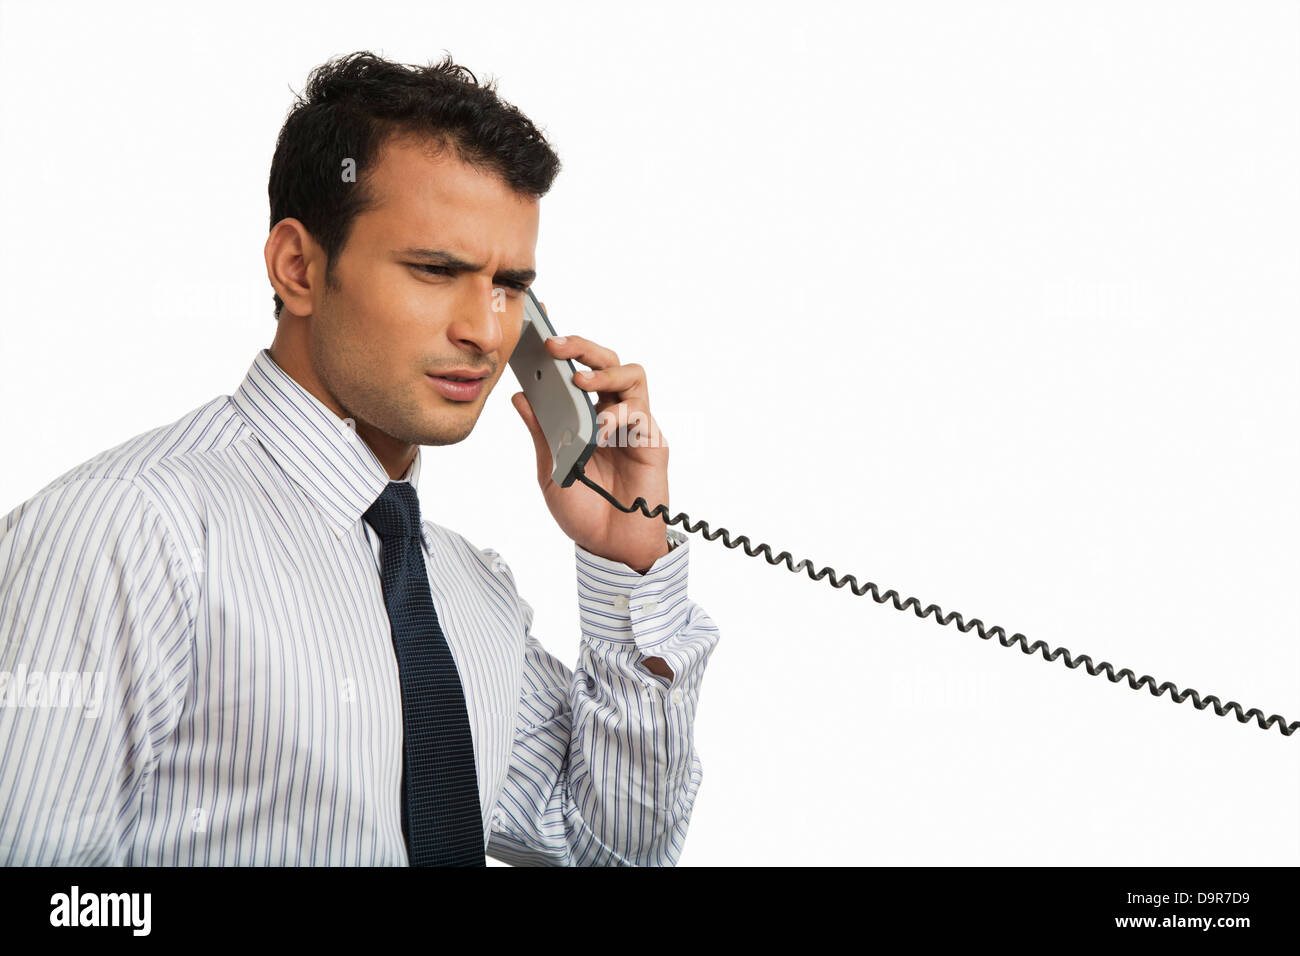 Businessman talking on a landline phone Stock Photo